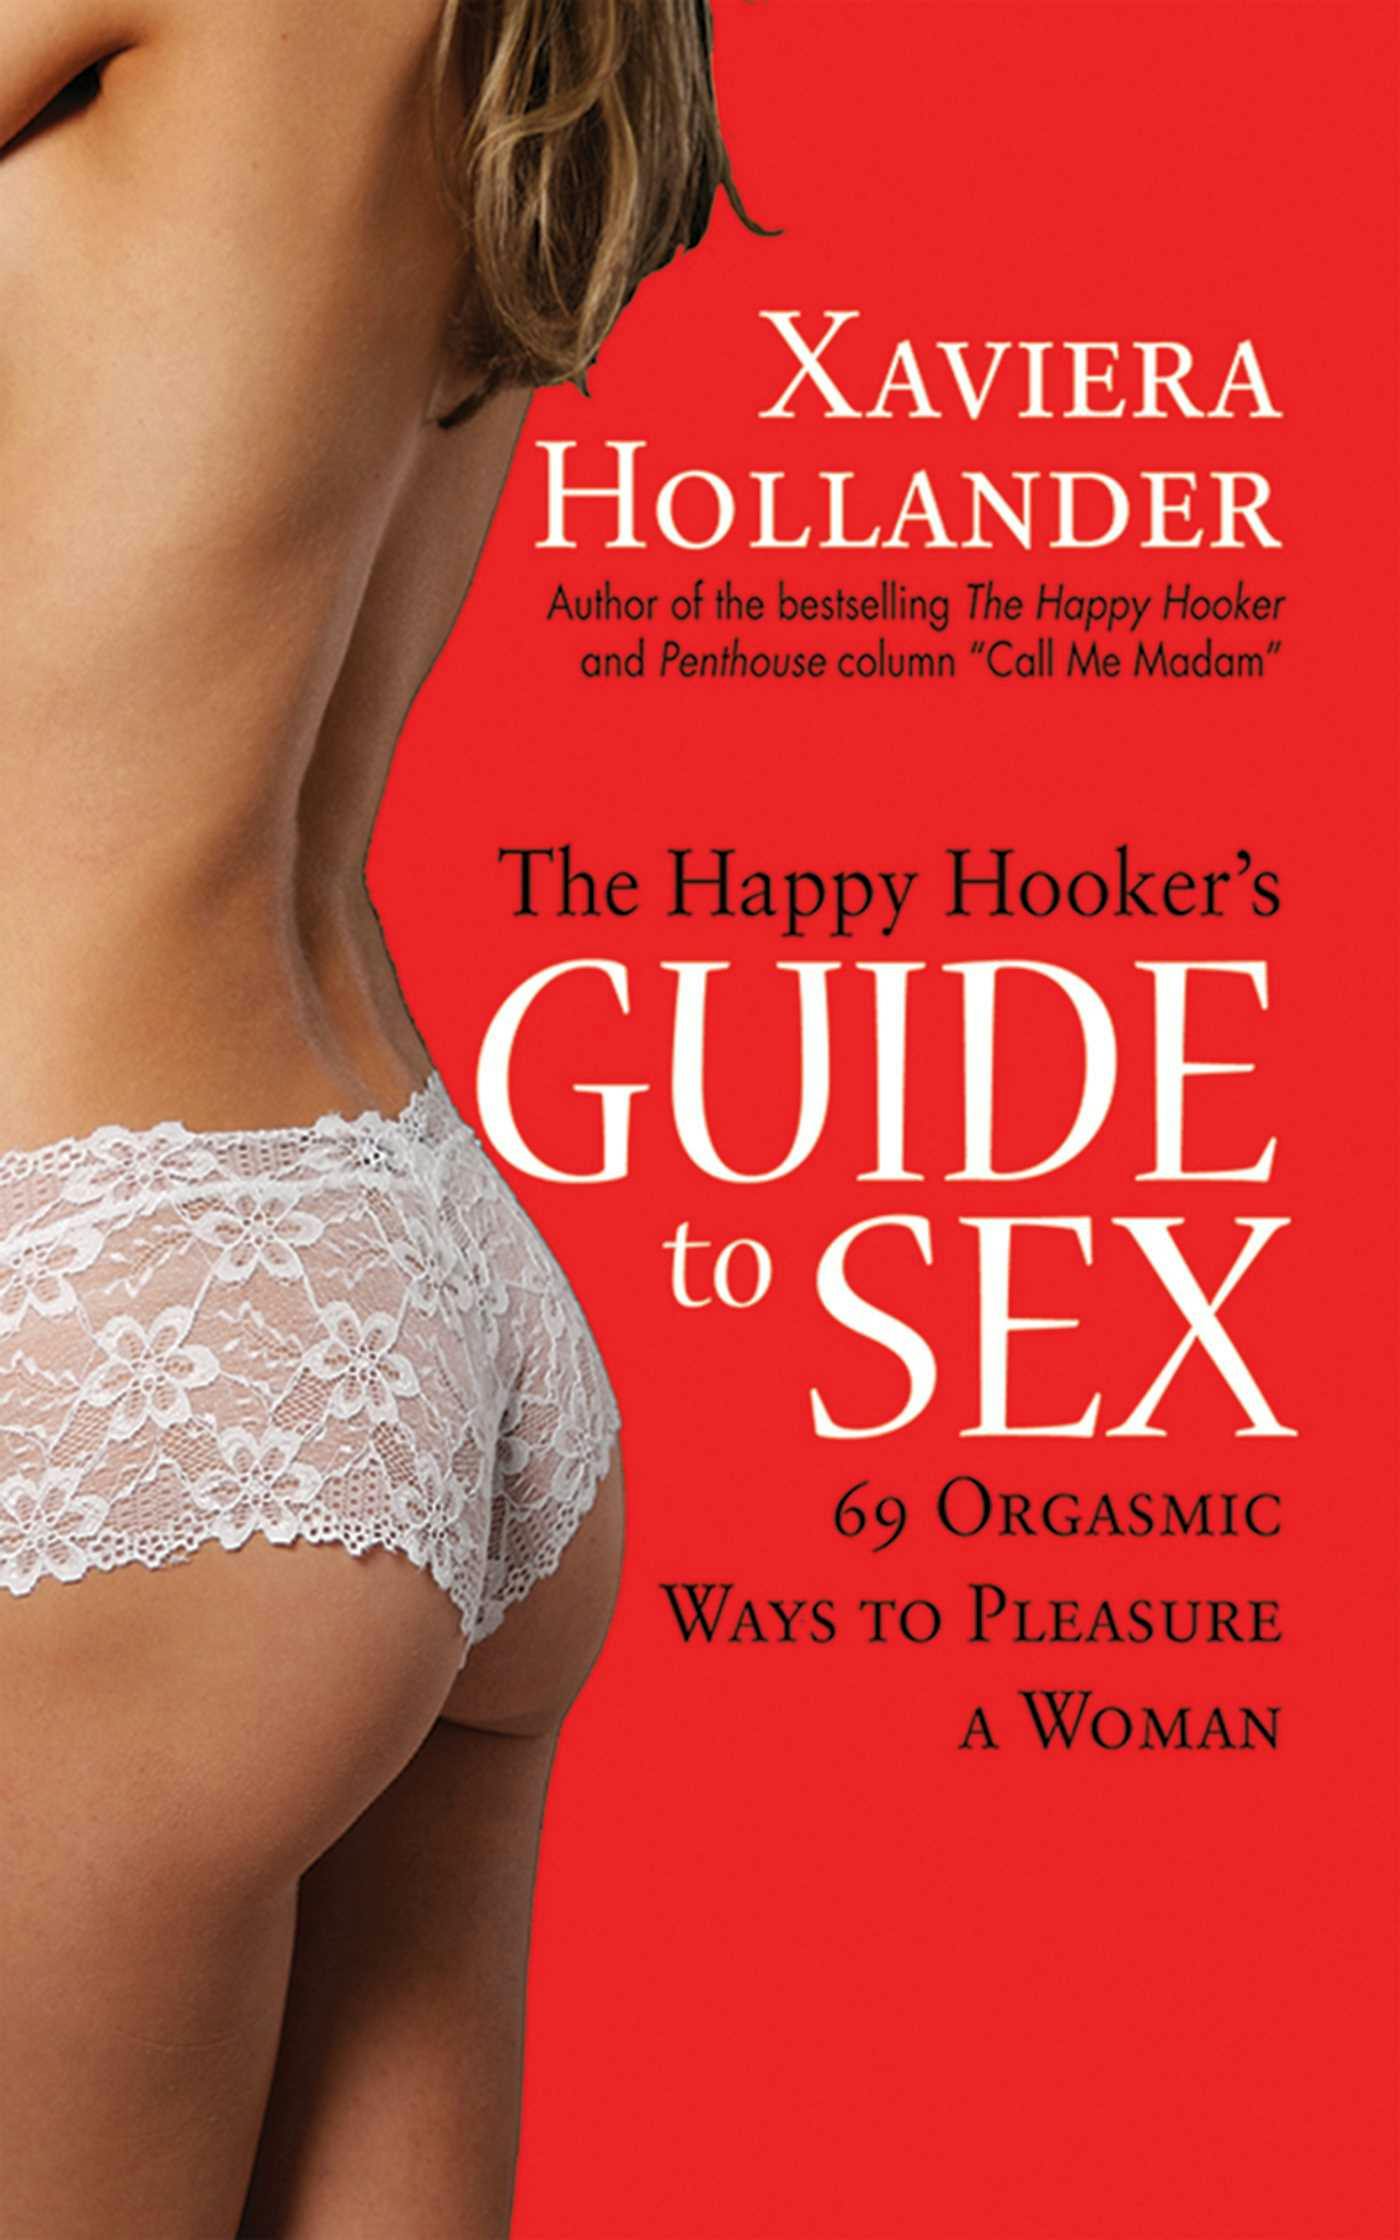 The Happy Hooker's Guide to Sex: 69 Orgasmic Ways to Pleasure a Woman - Xaviera Hollander